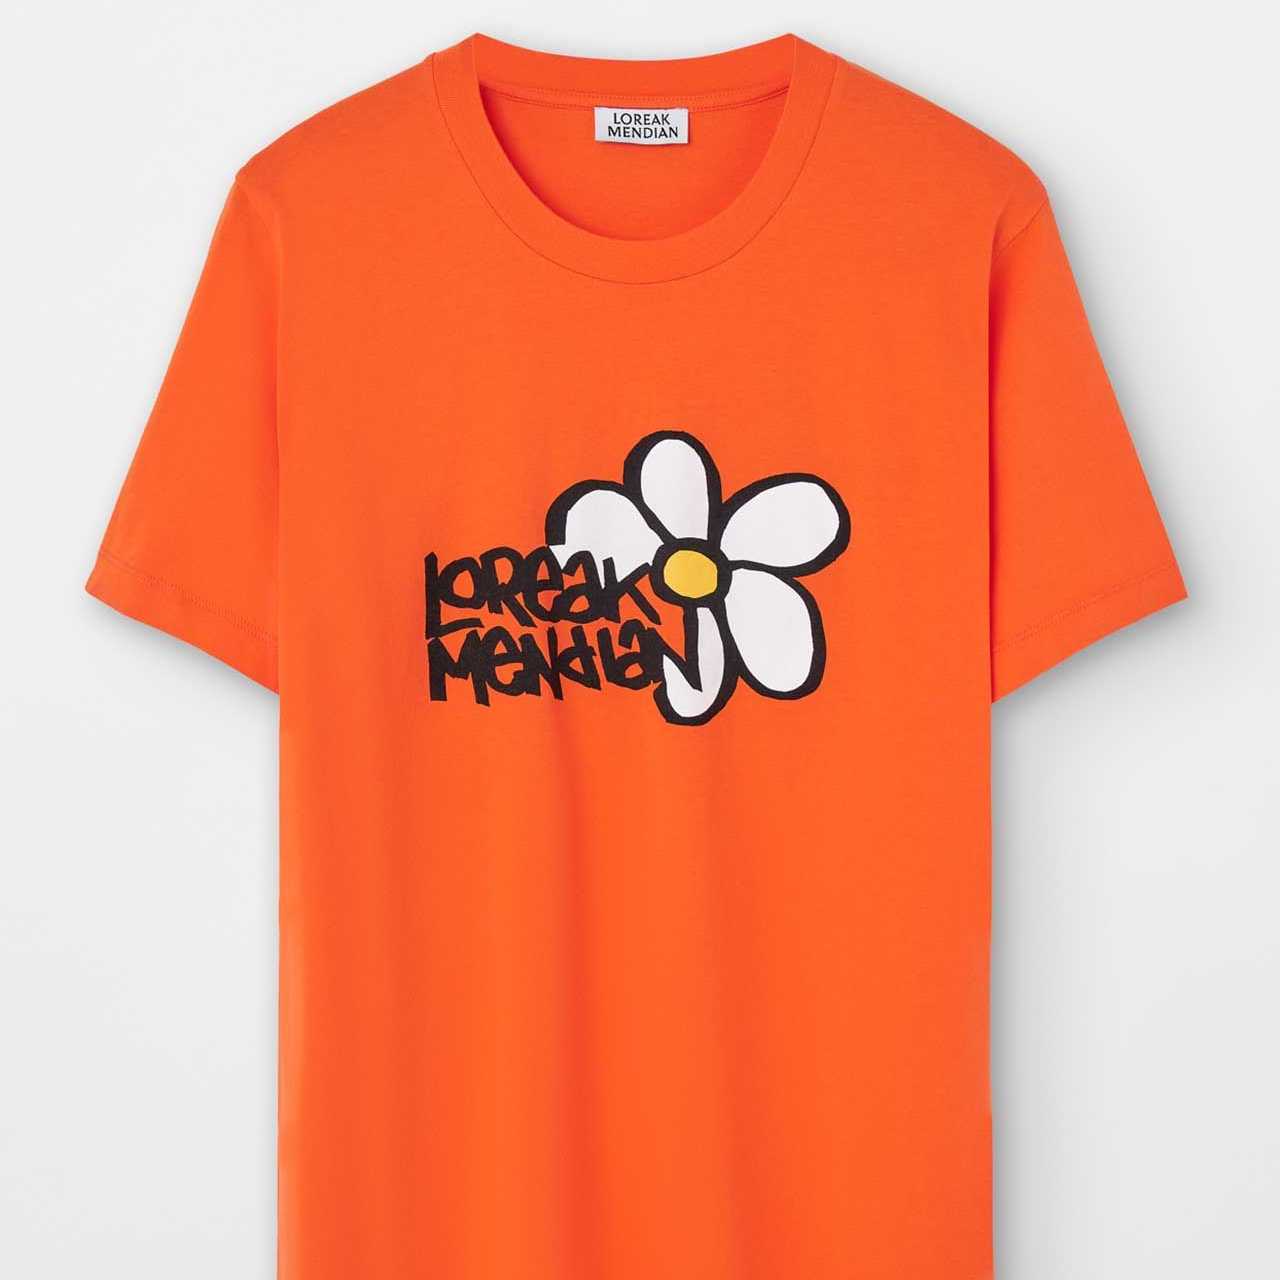 Camiseta Loreak Mendian Margarita Orange